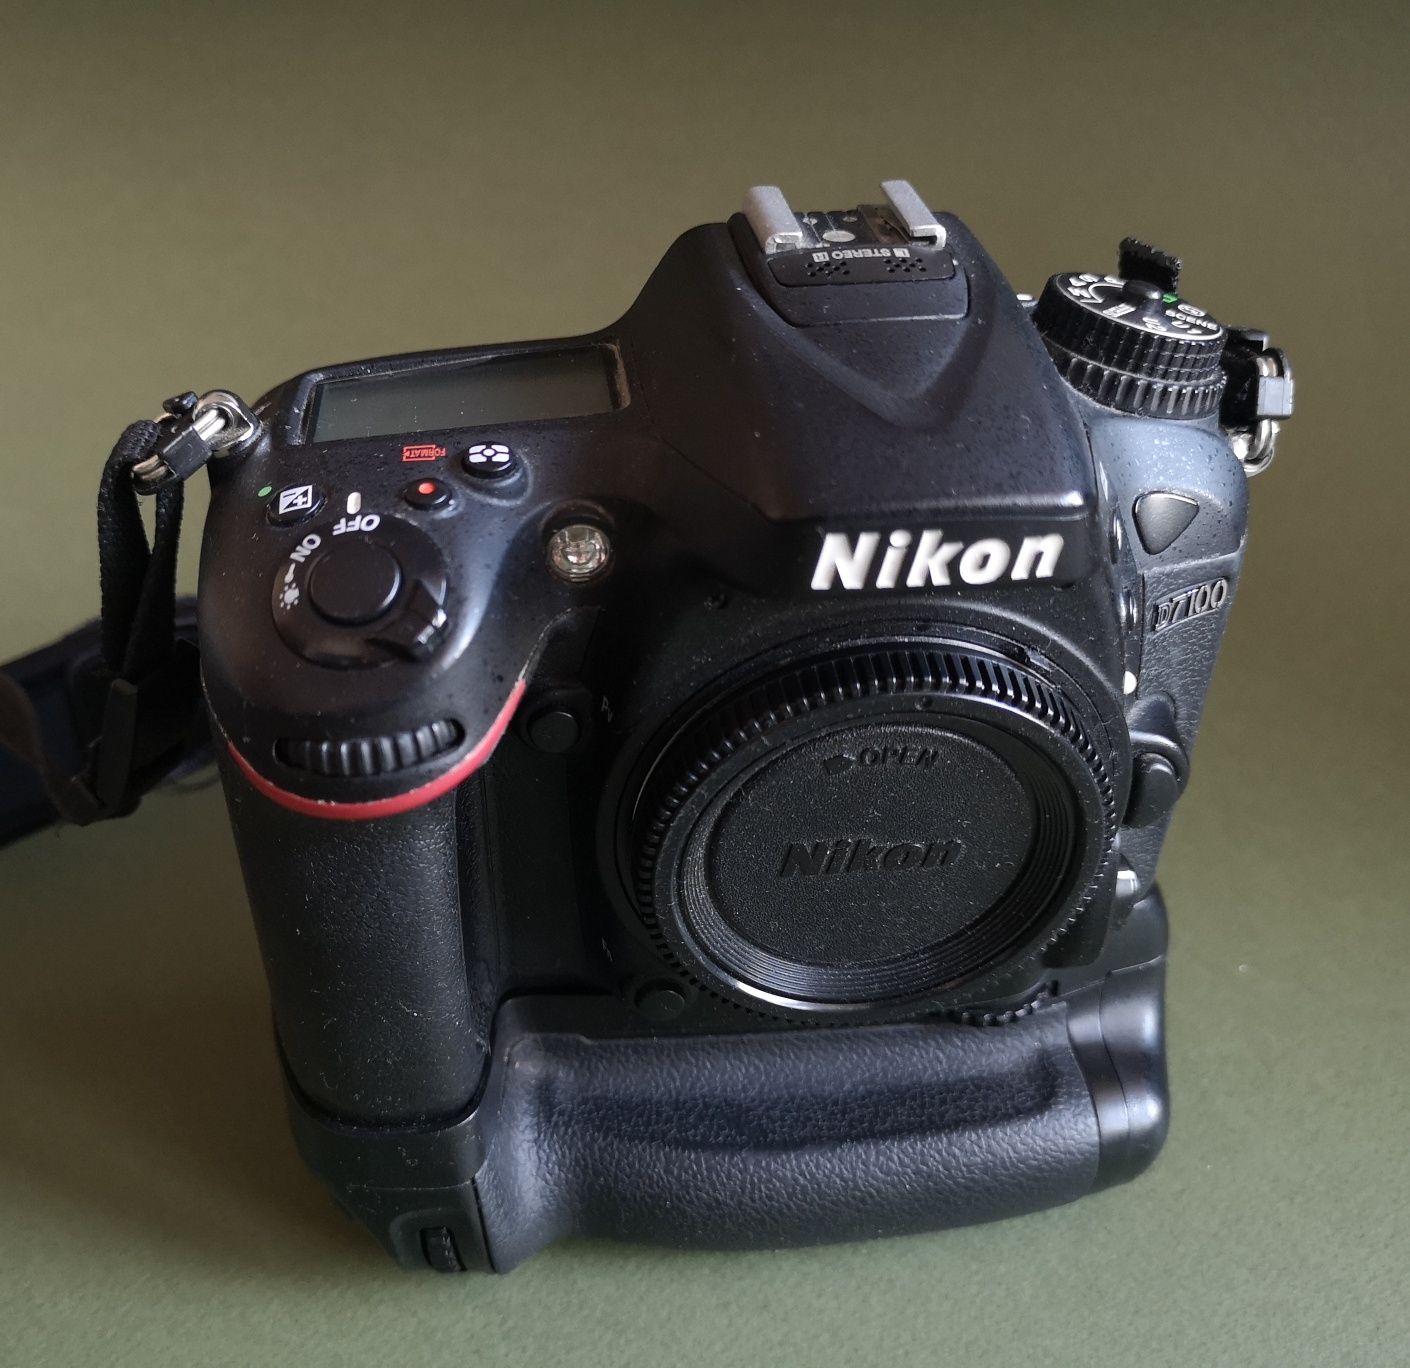 Echipament foto Nikon D7100, 50mm 1.4, sigma 17-70